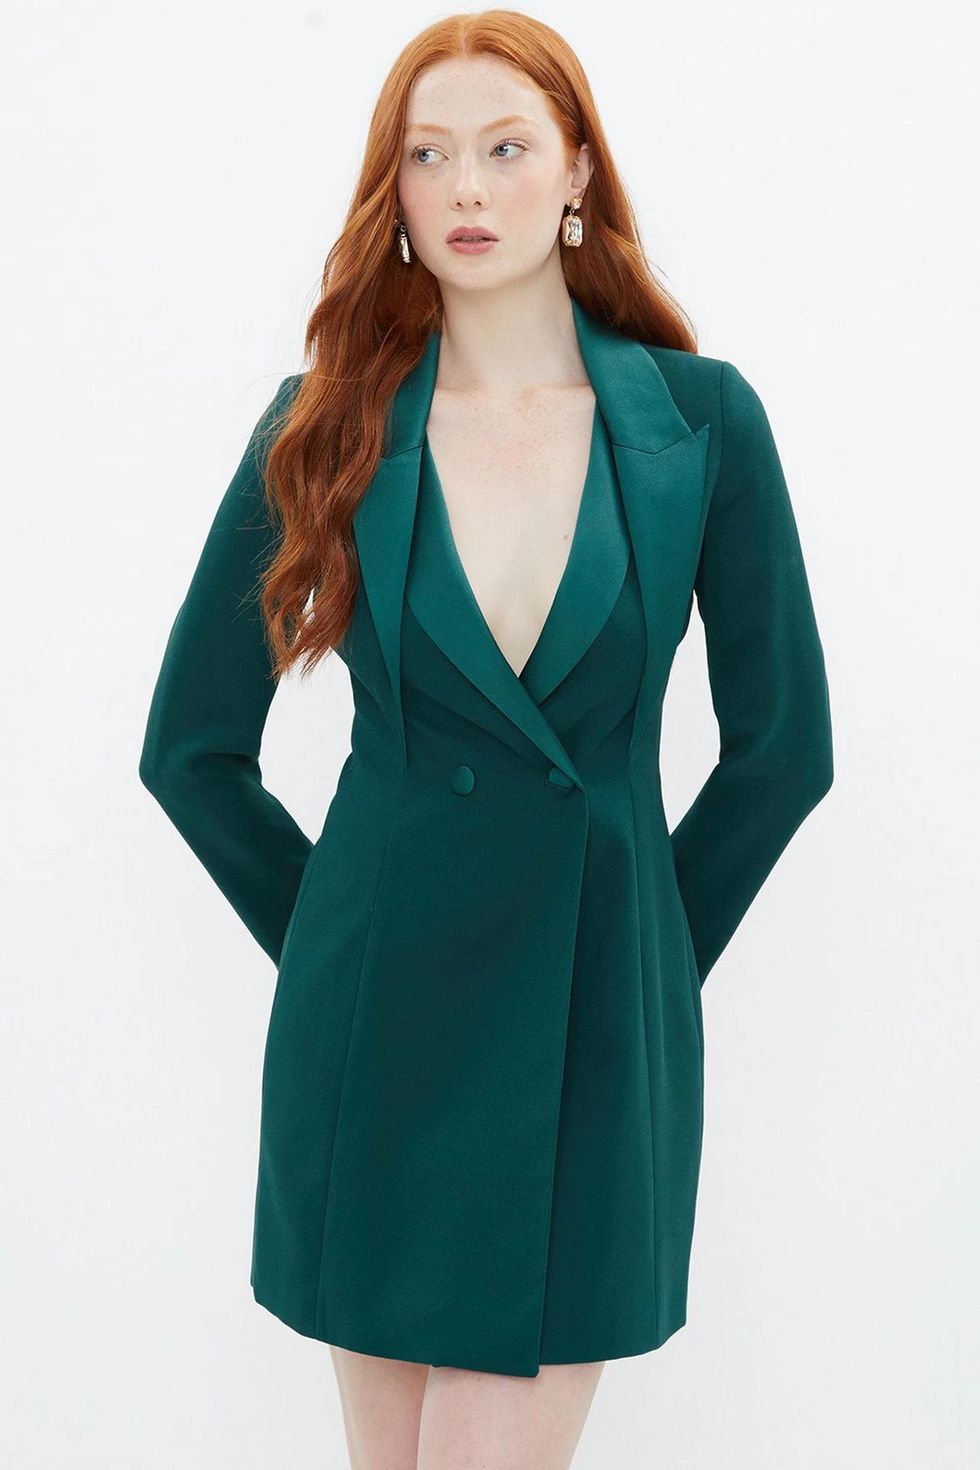 19 best blazer dress styles to shop in